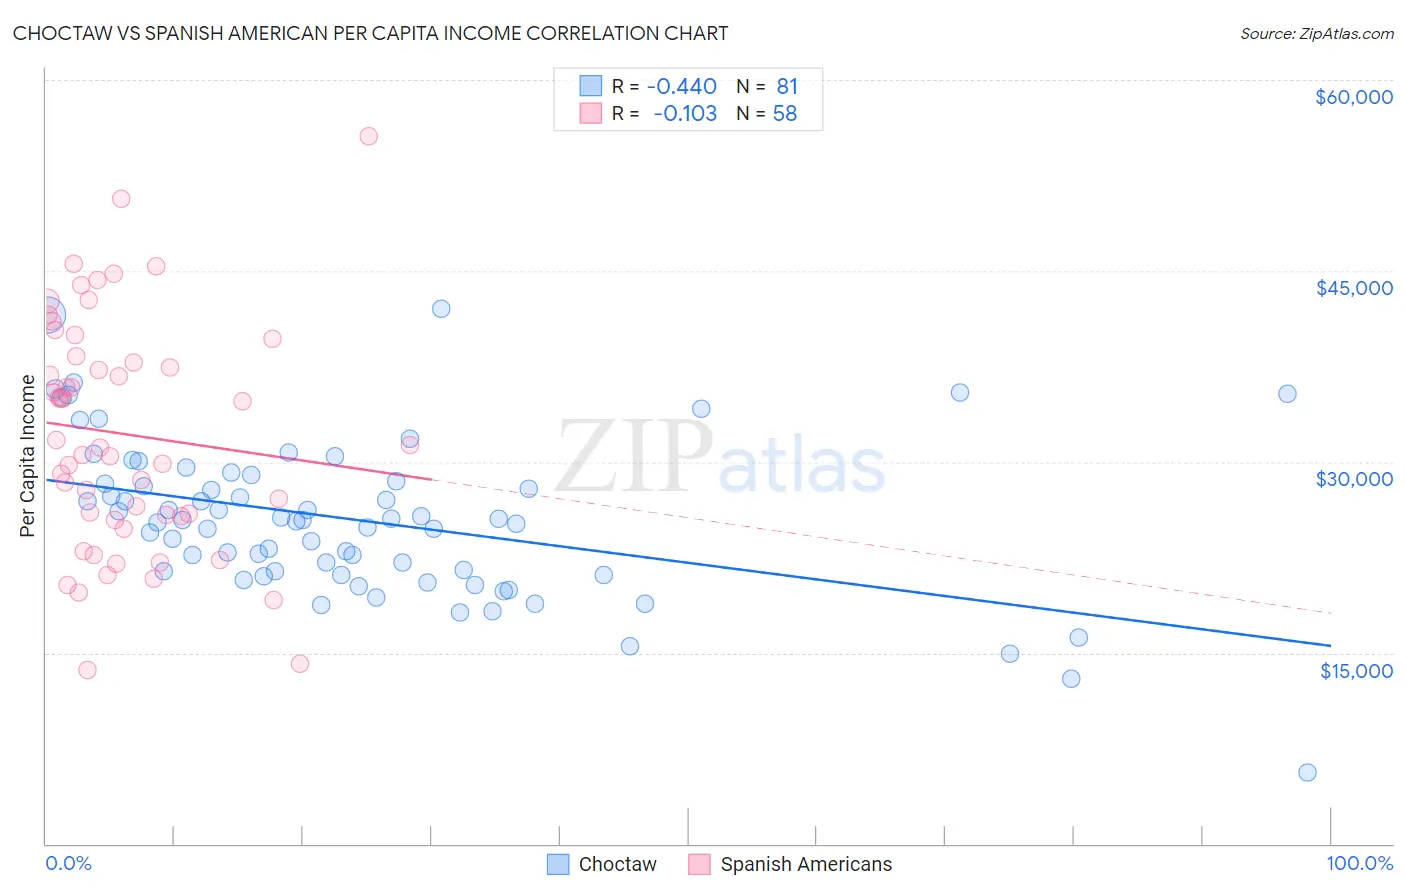 Choctaw vs Spanish American Per Capita Income